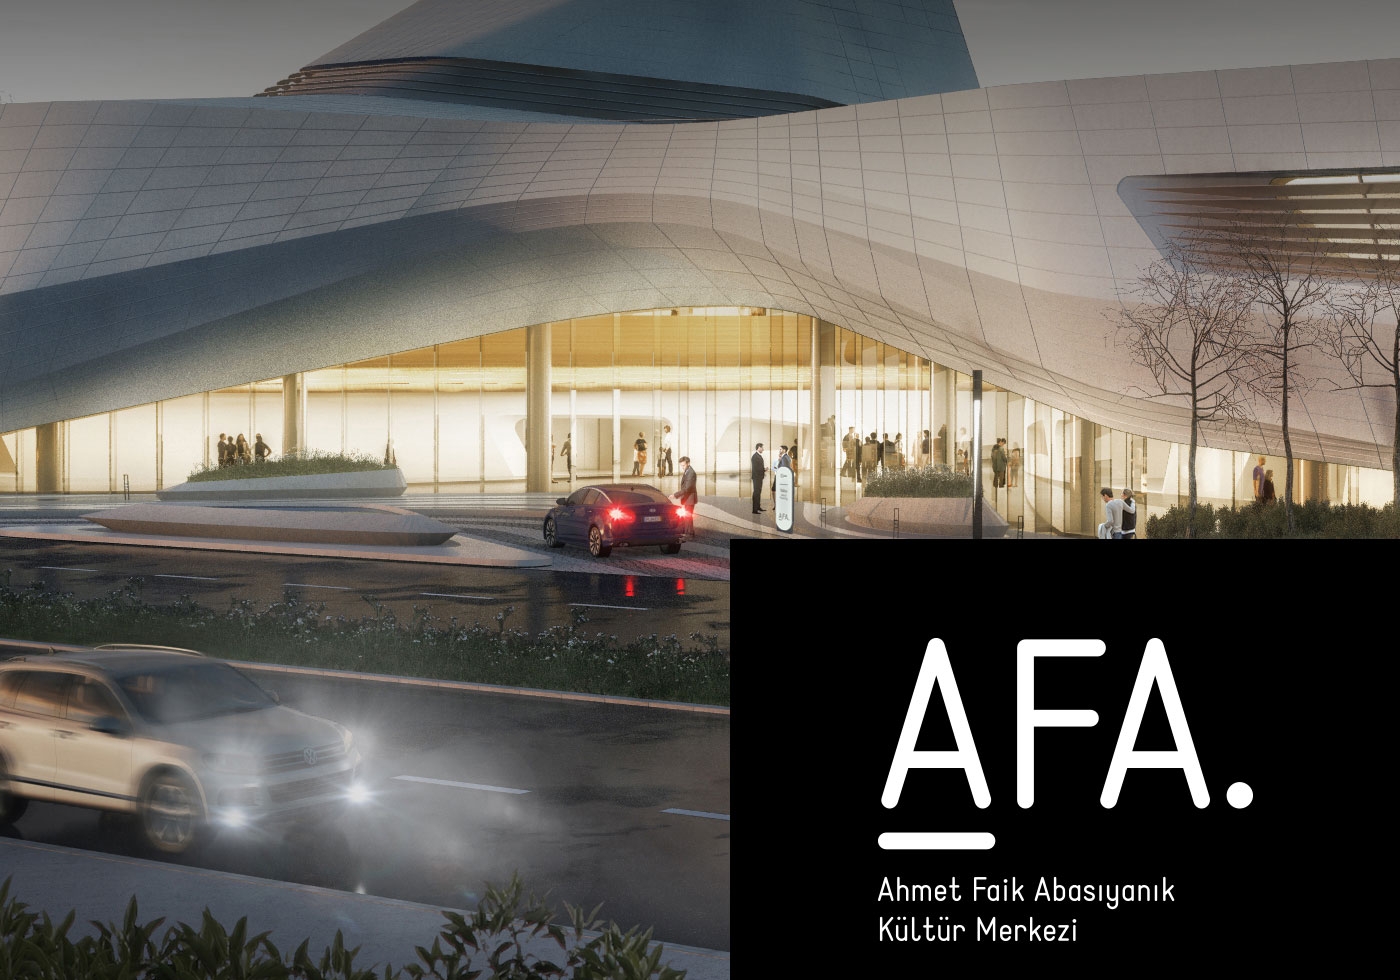 AFA Culture and Congress Center